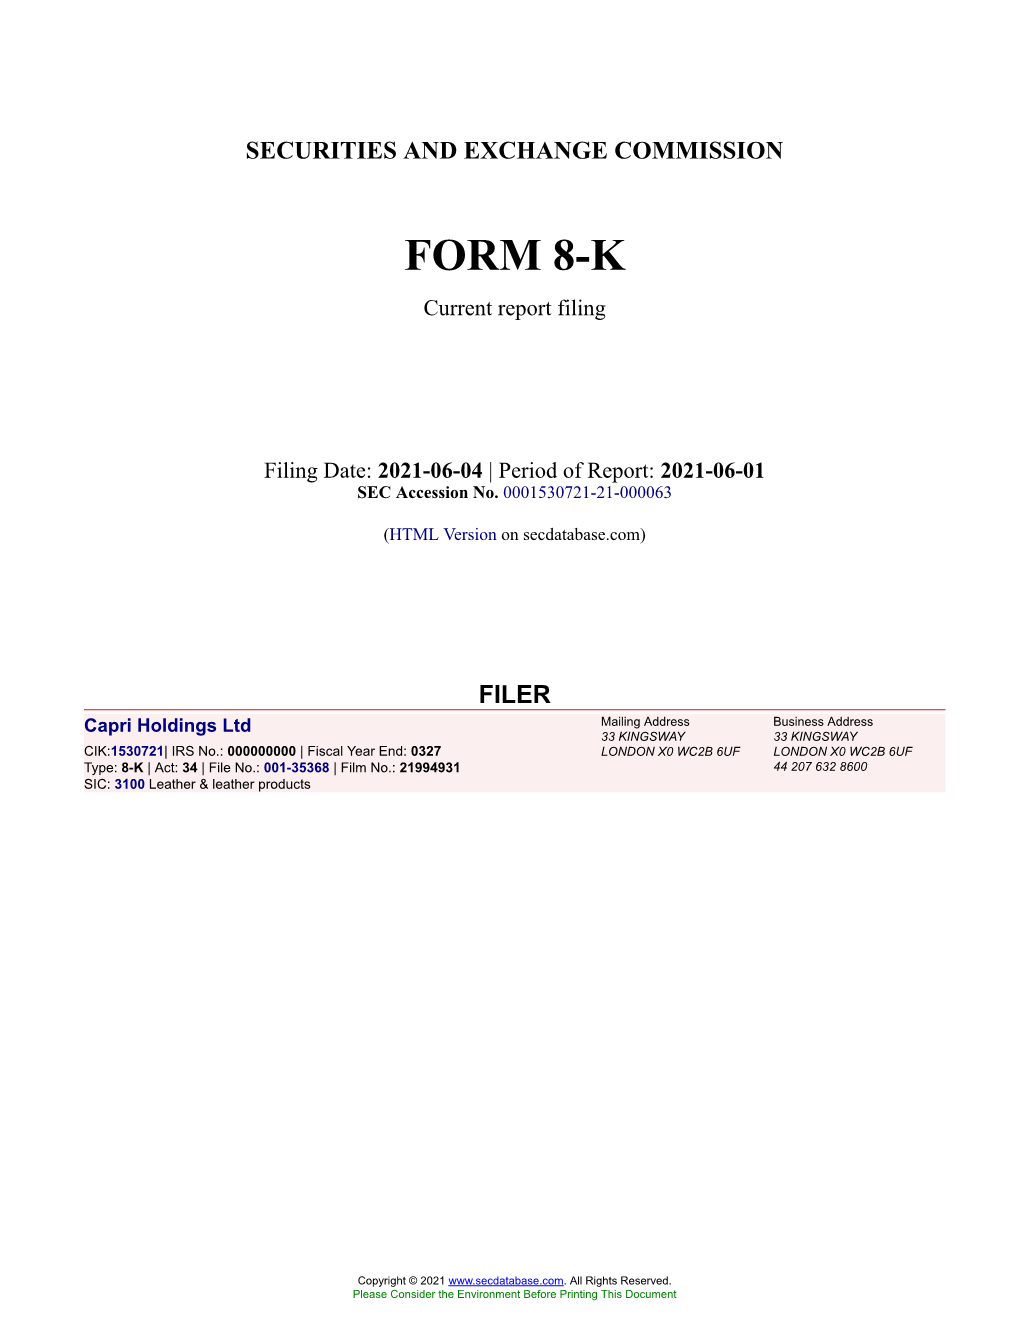 Capri Holdings Ltd Form 8-K Current Event Report Filed 2021-06-04